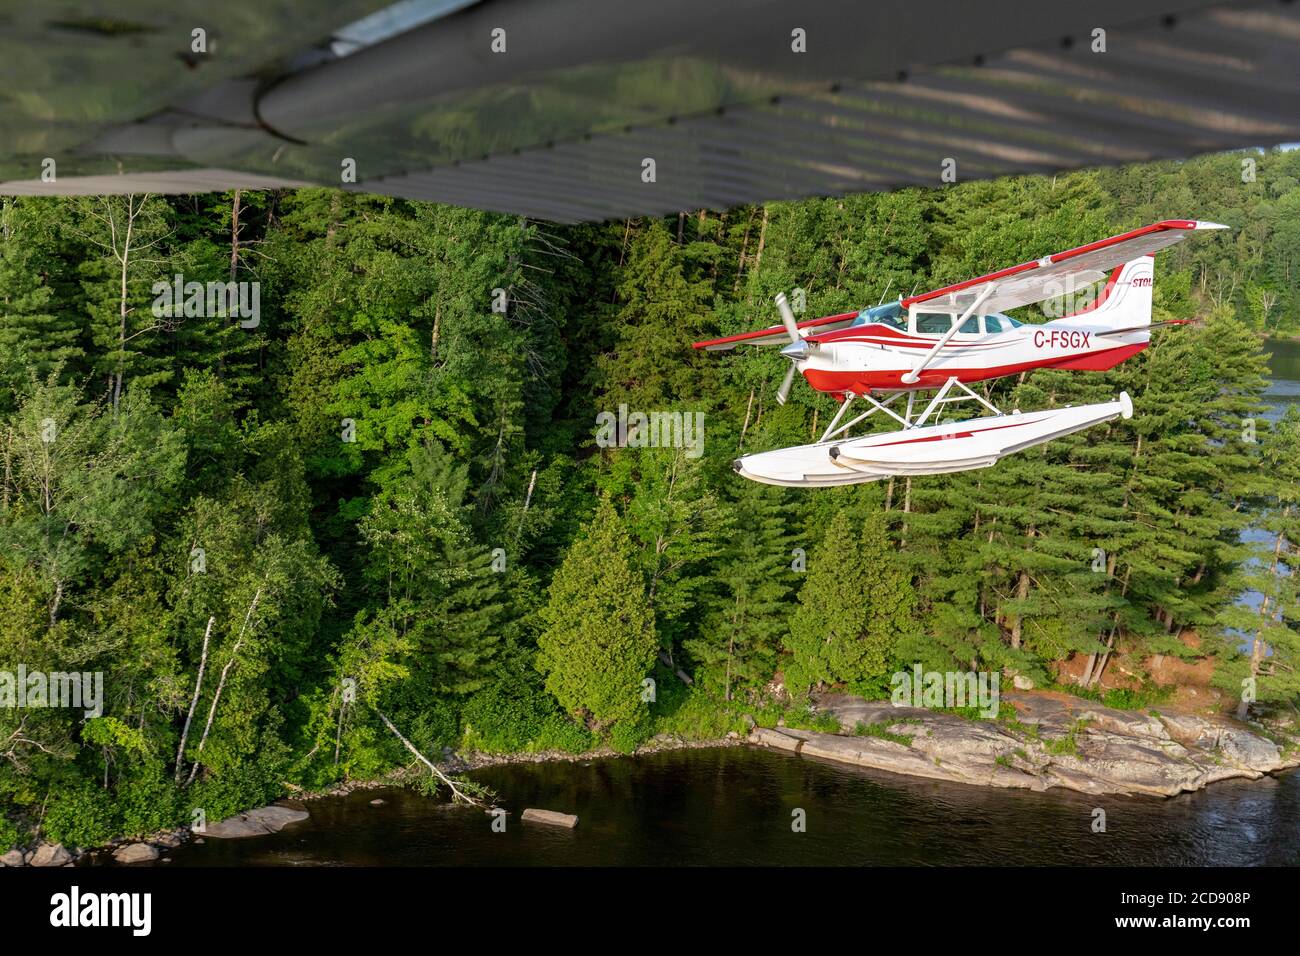 Canada, Province of Quebec, Mauricie Region, Hydravion Adventure, Cessna 206 Flight, Landing Stock Photo